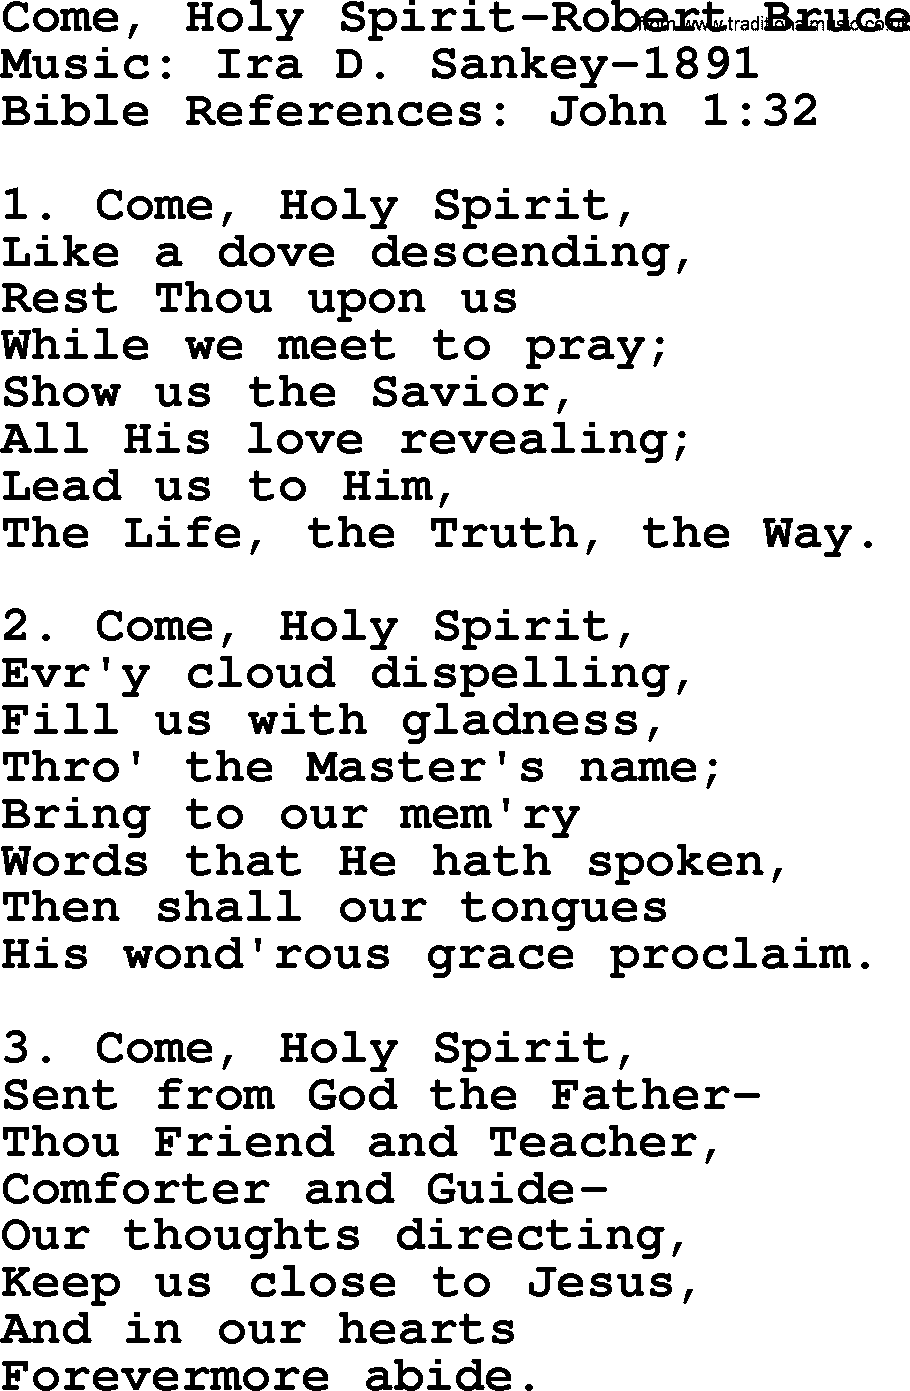 Ira Sankey hymn: Come, Holy Spirit-Robert Bruce-Ira Sankey, lyrics